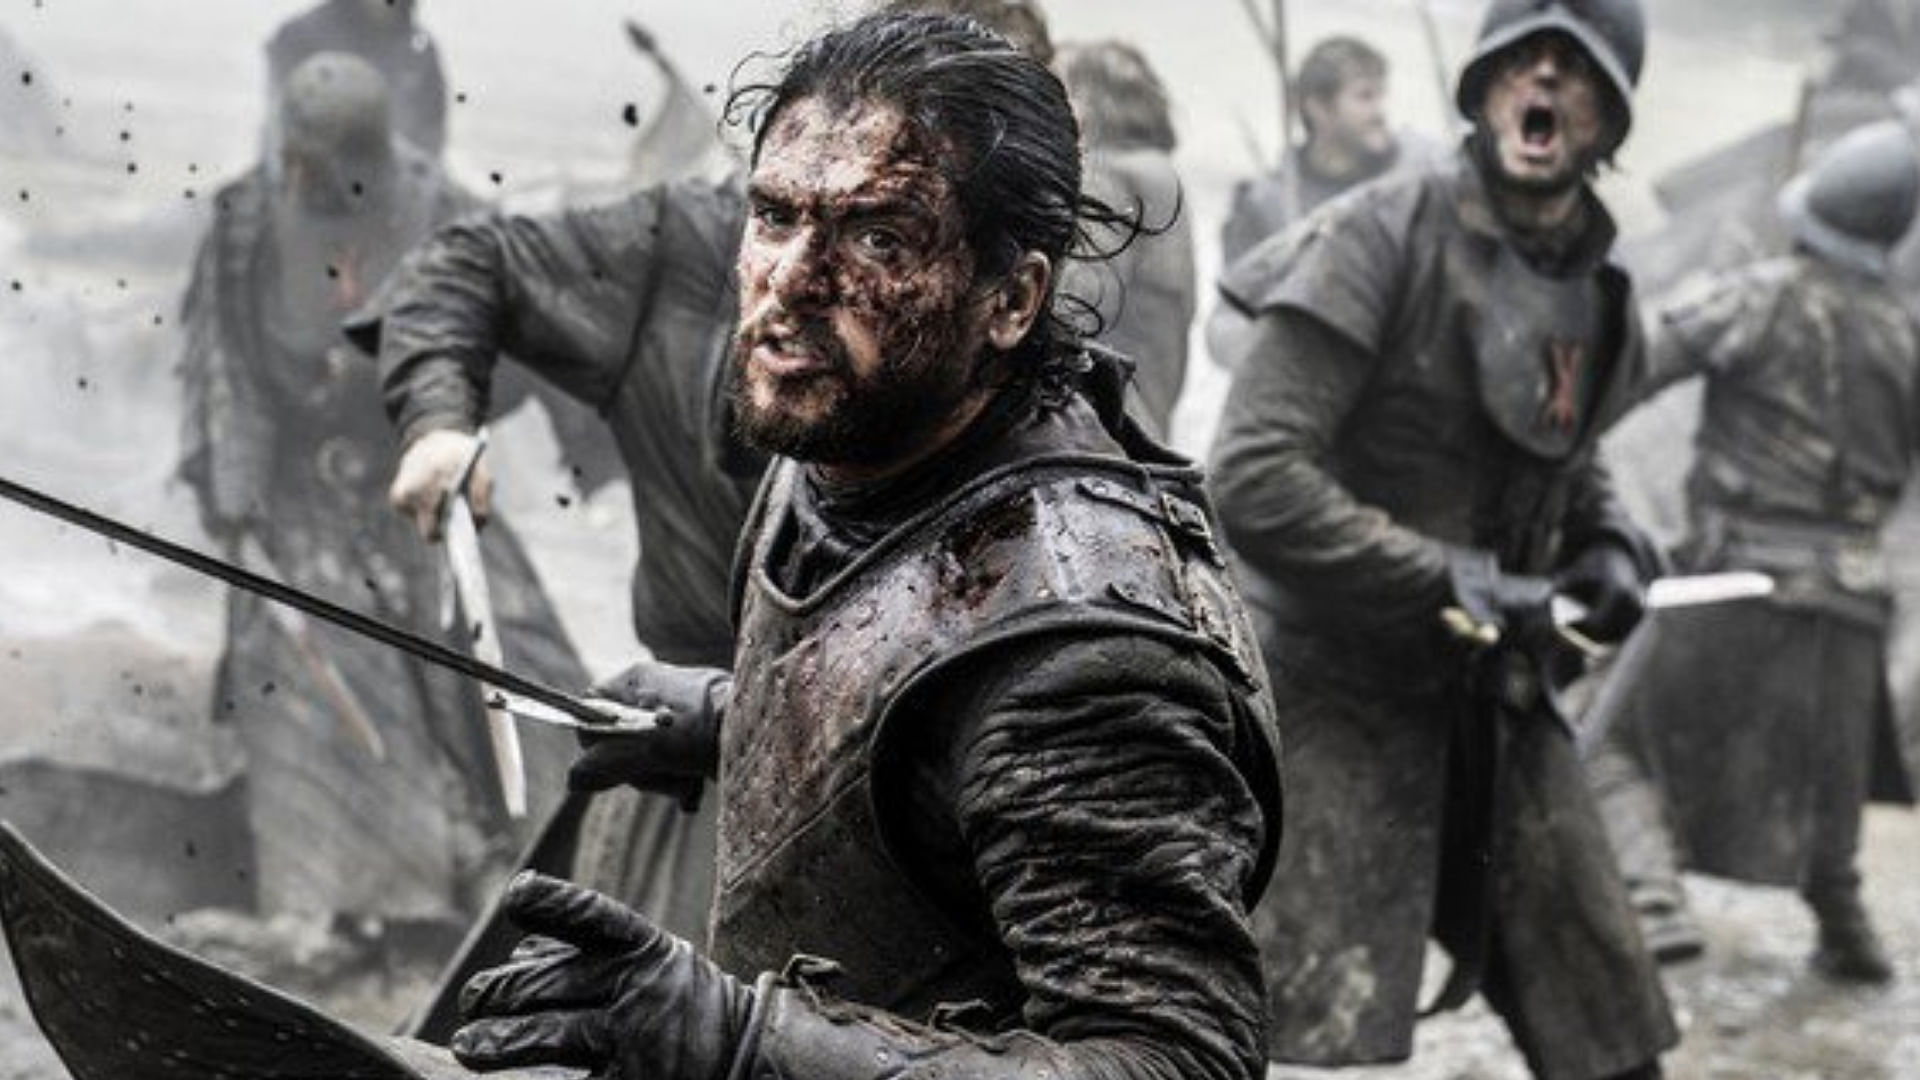 Kit Harington as Jon Snow in a still from <i>Game of Thrones</i>.